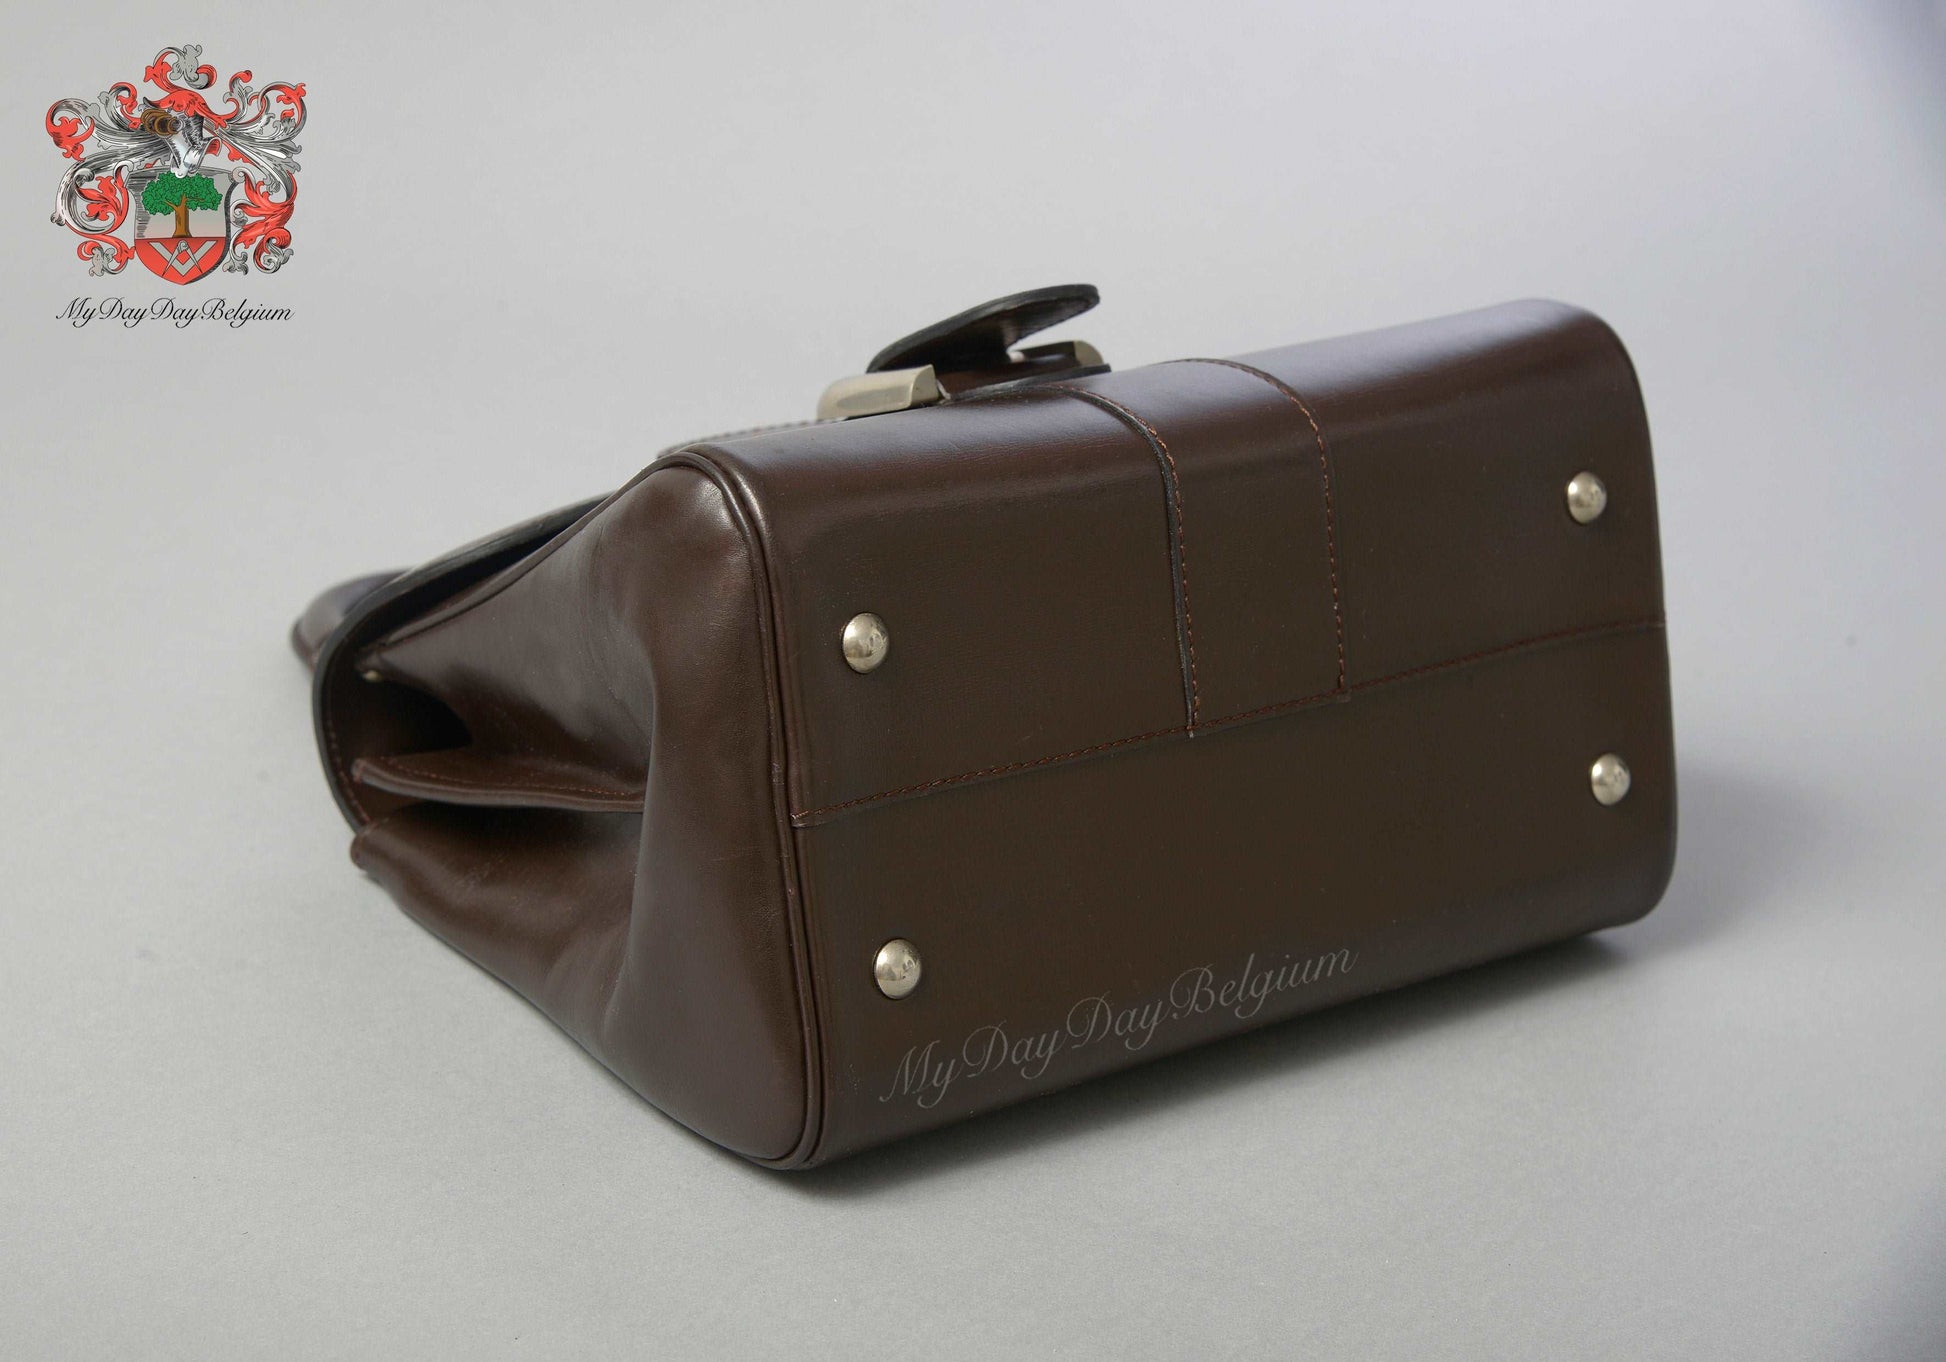 Delvaux Vintage Handbag Model Brillant in Smooth Brown Leather 